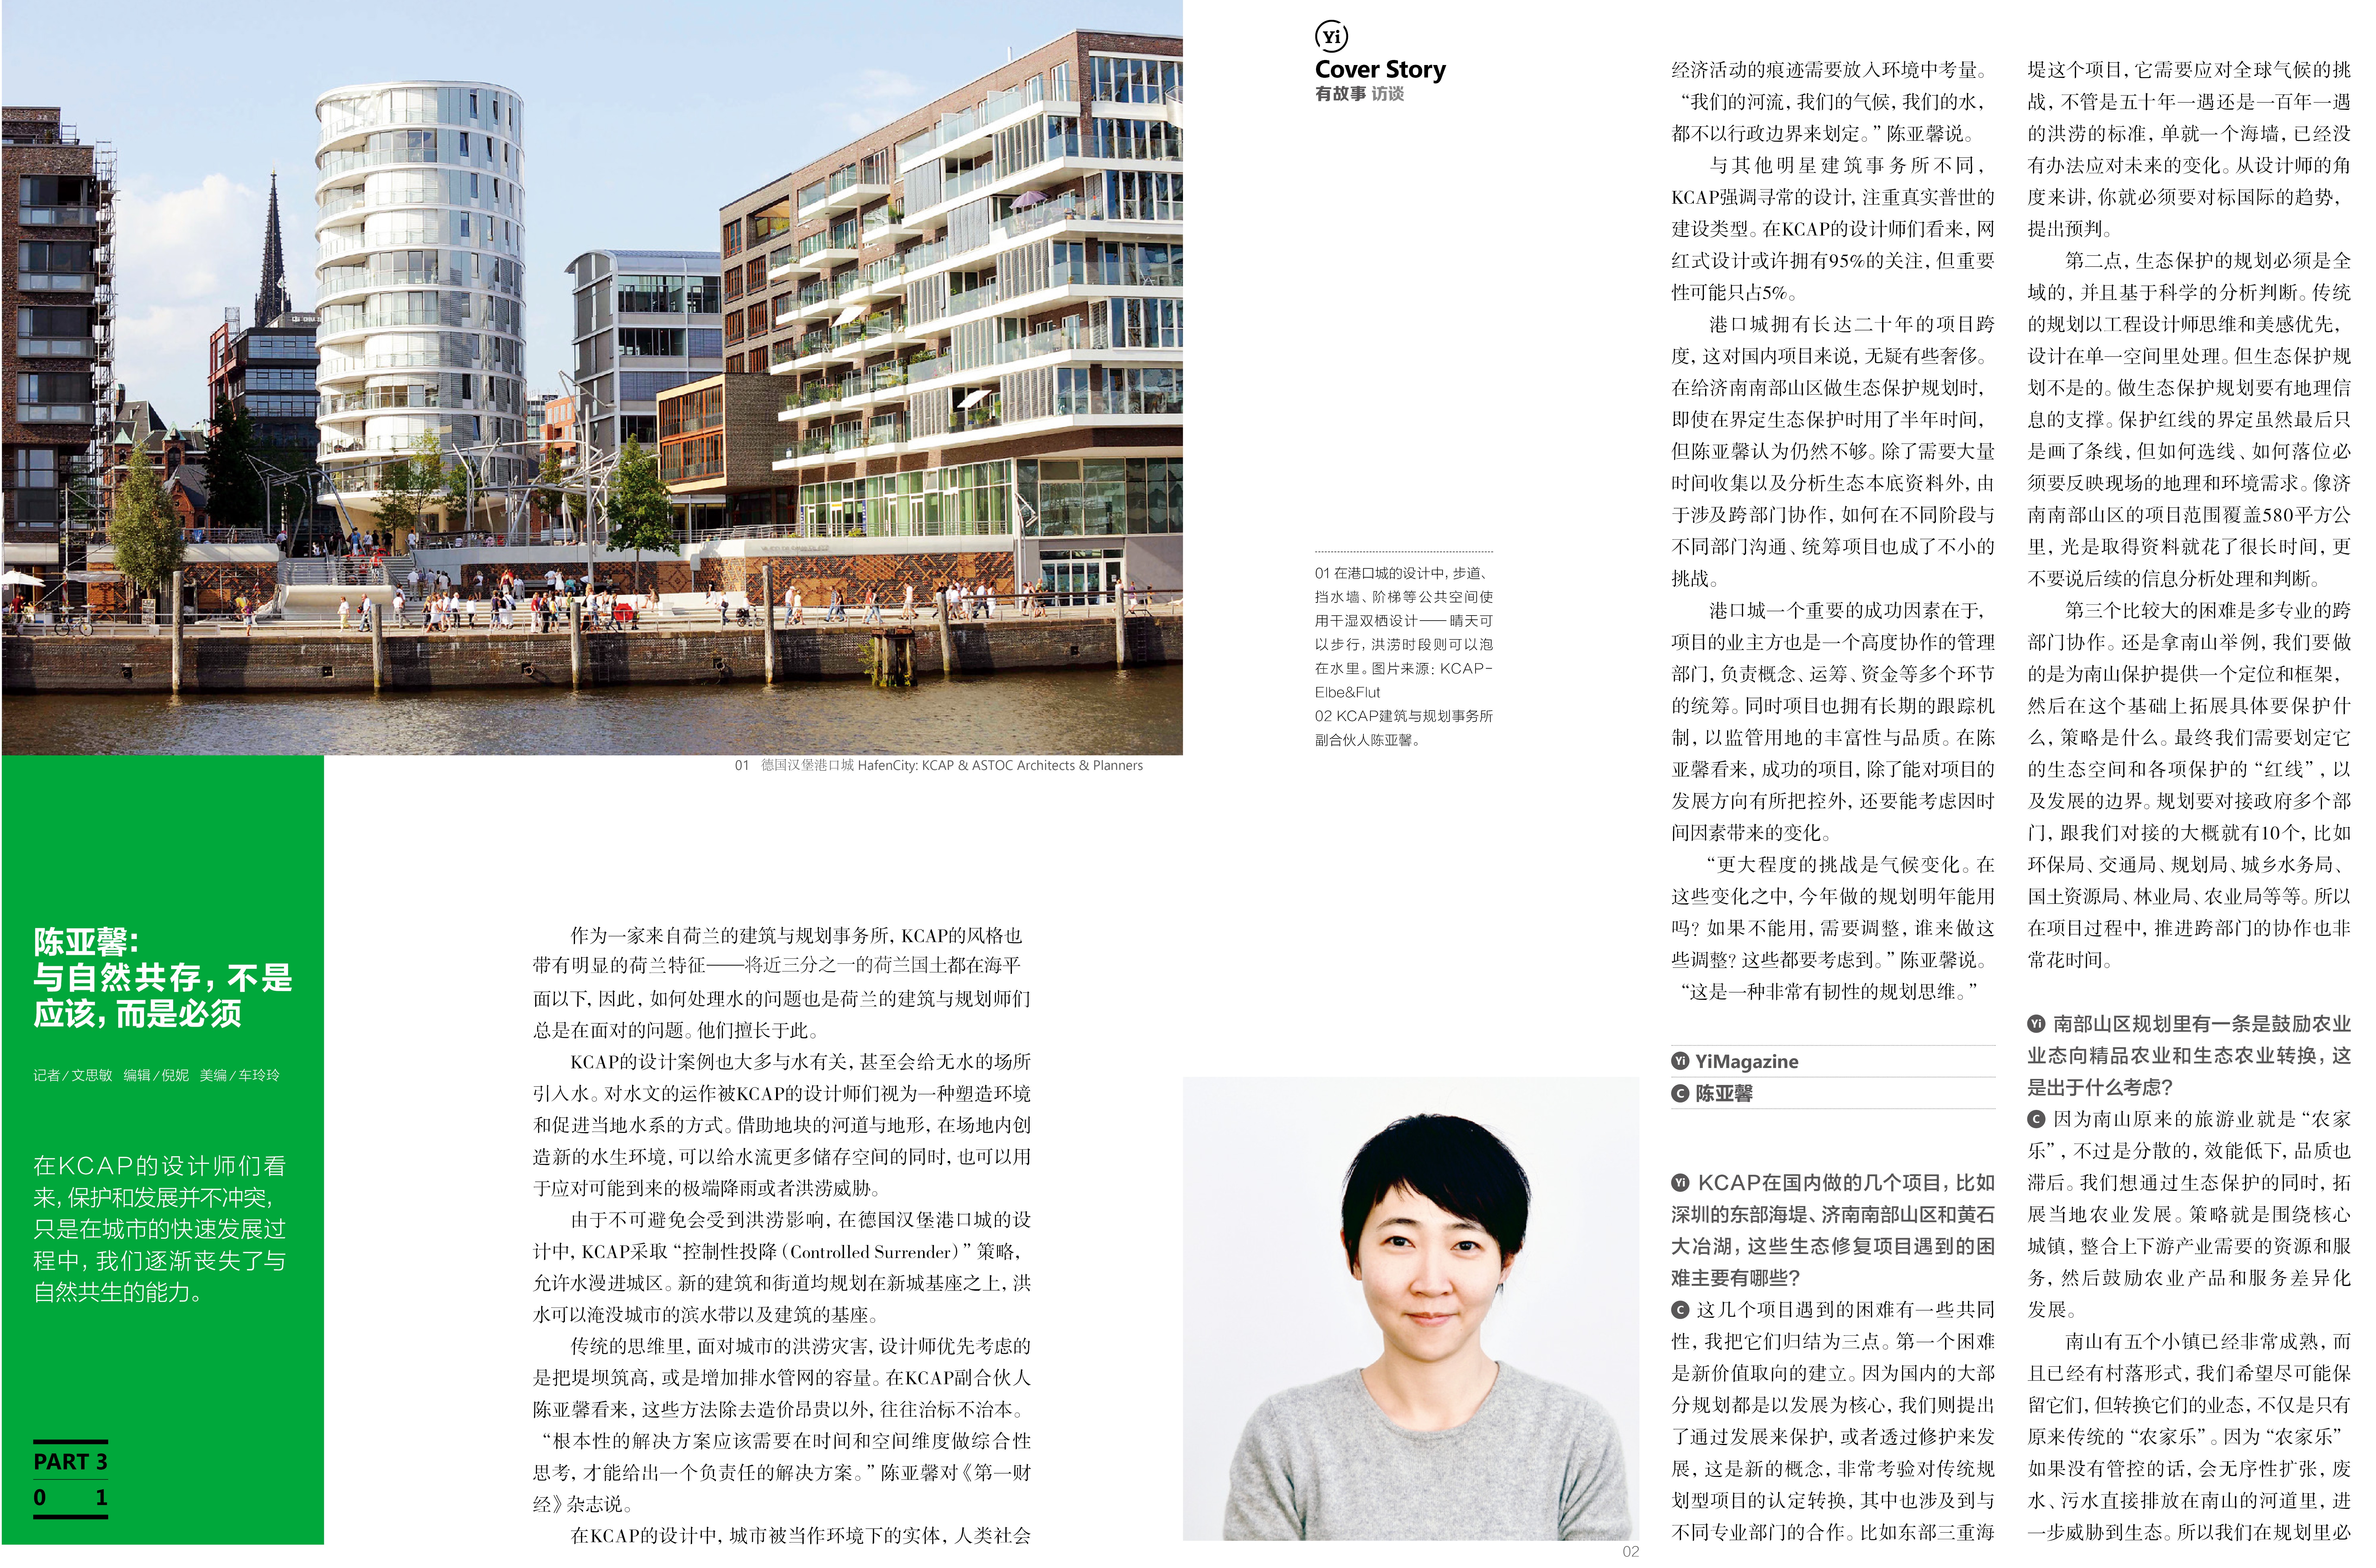 Ya-Hsin Chen featured in CBN's first design publication